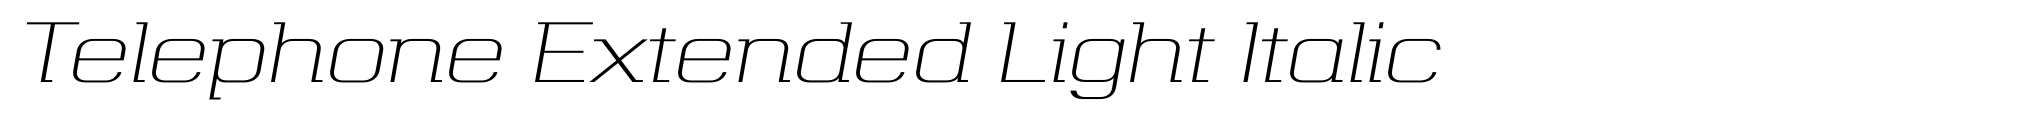 Telephone Extended Light Italic image